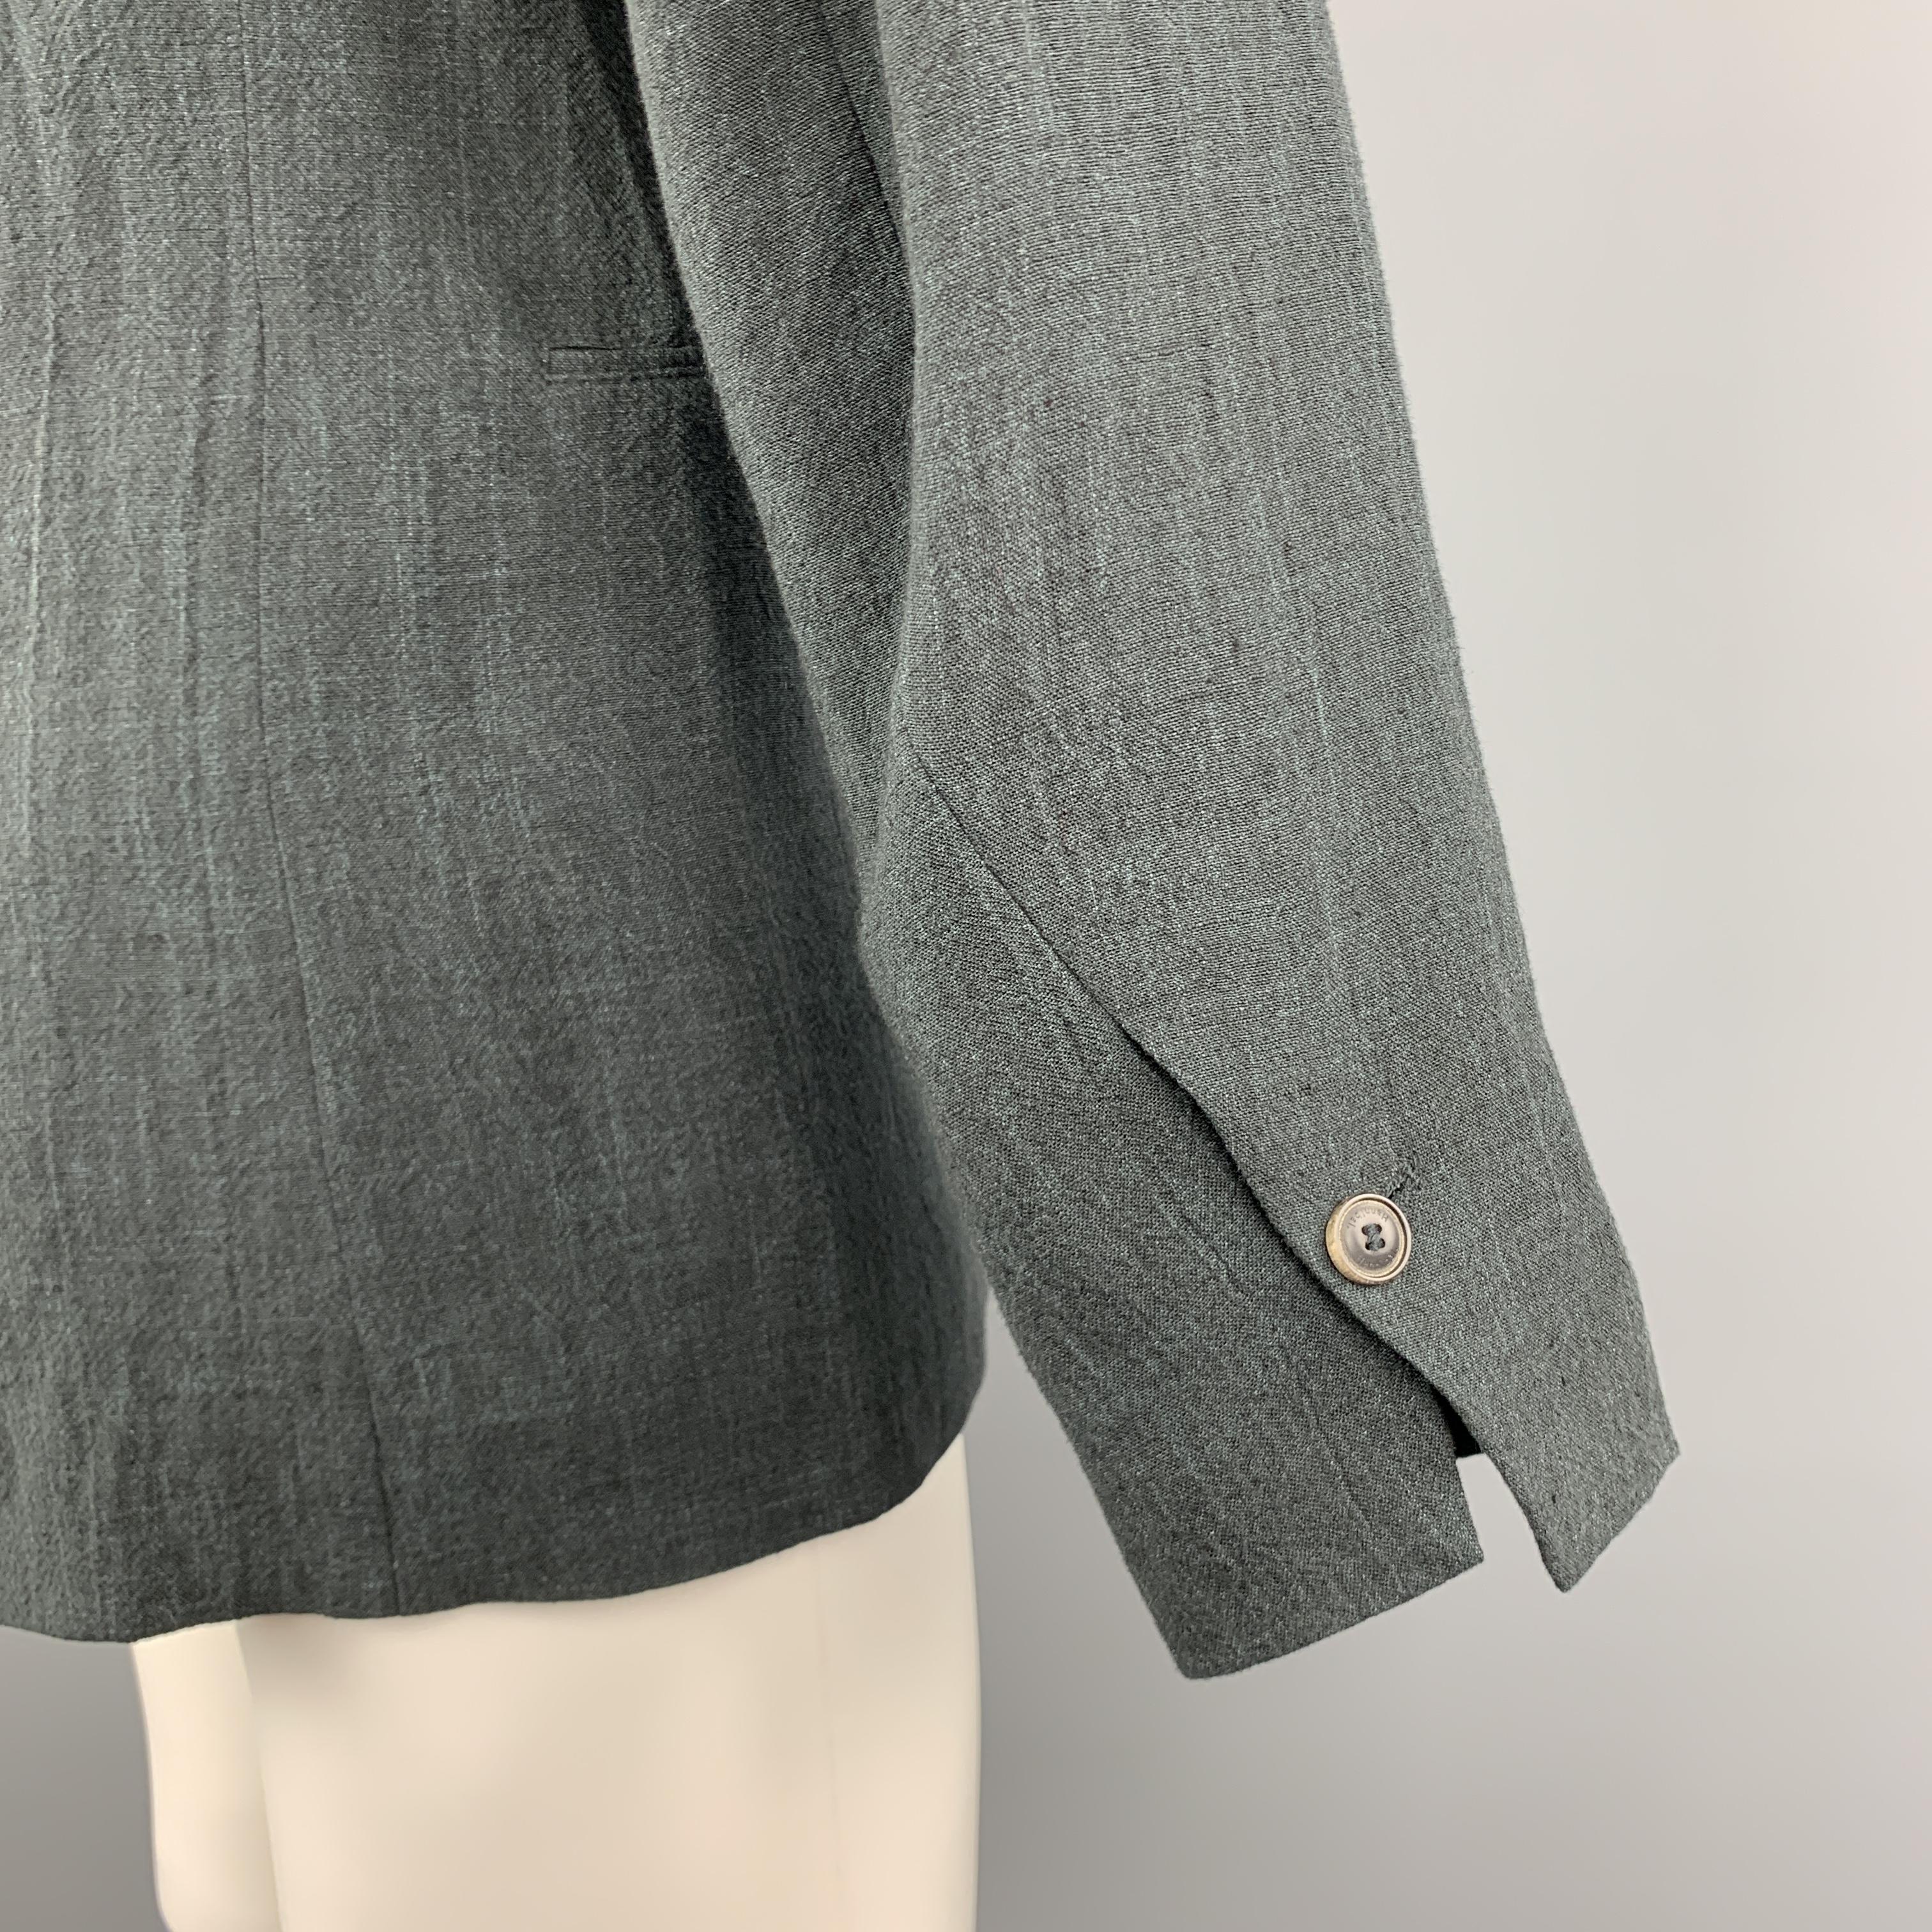 HANNIBAL Size 36 Charcoal Linen Shawl Collar Asymmetrial Jacket 1